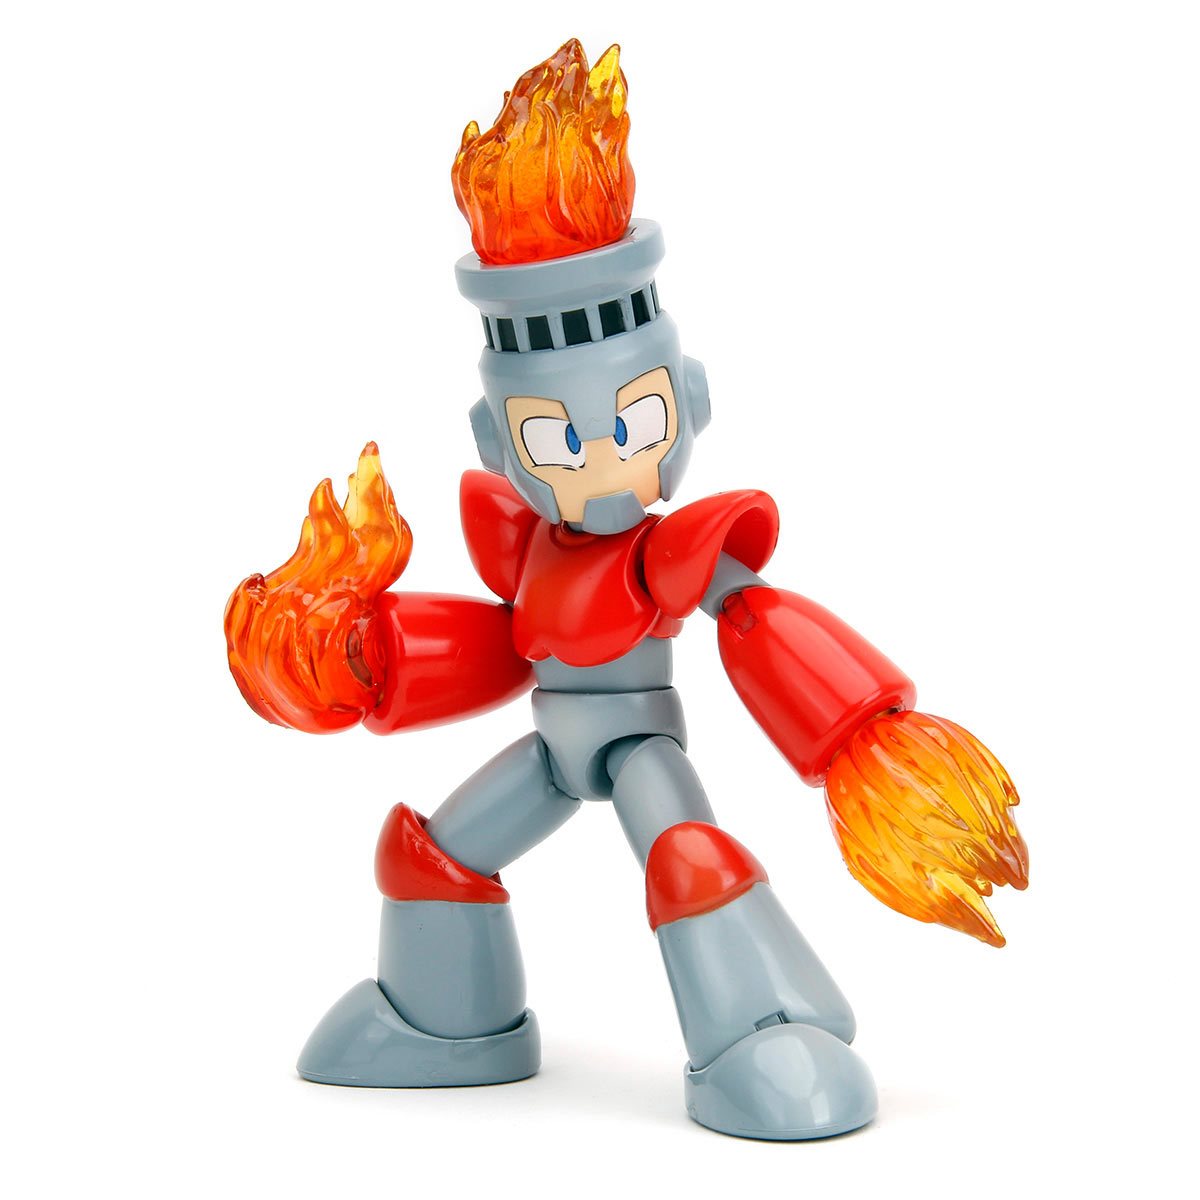 Mega Man Fire Man 1:12 Scale Action Figure 正規品画像